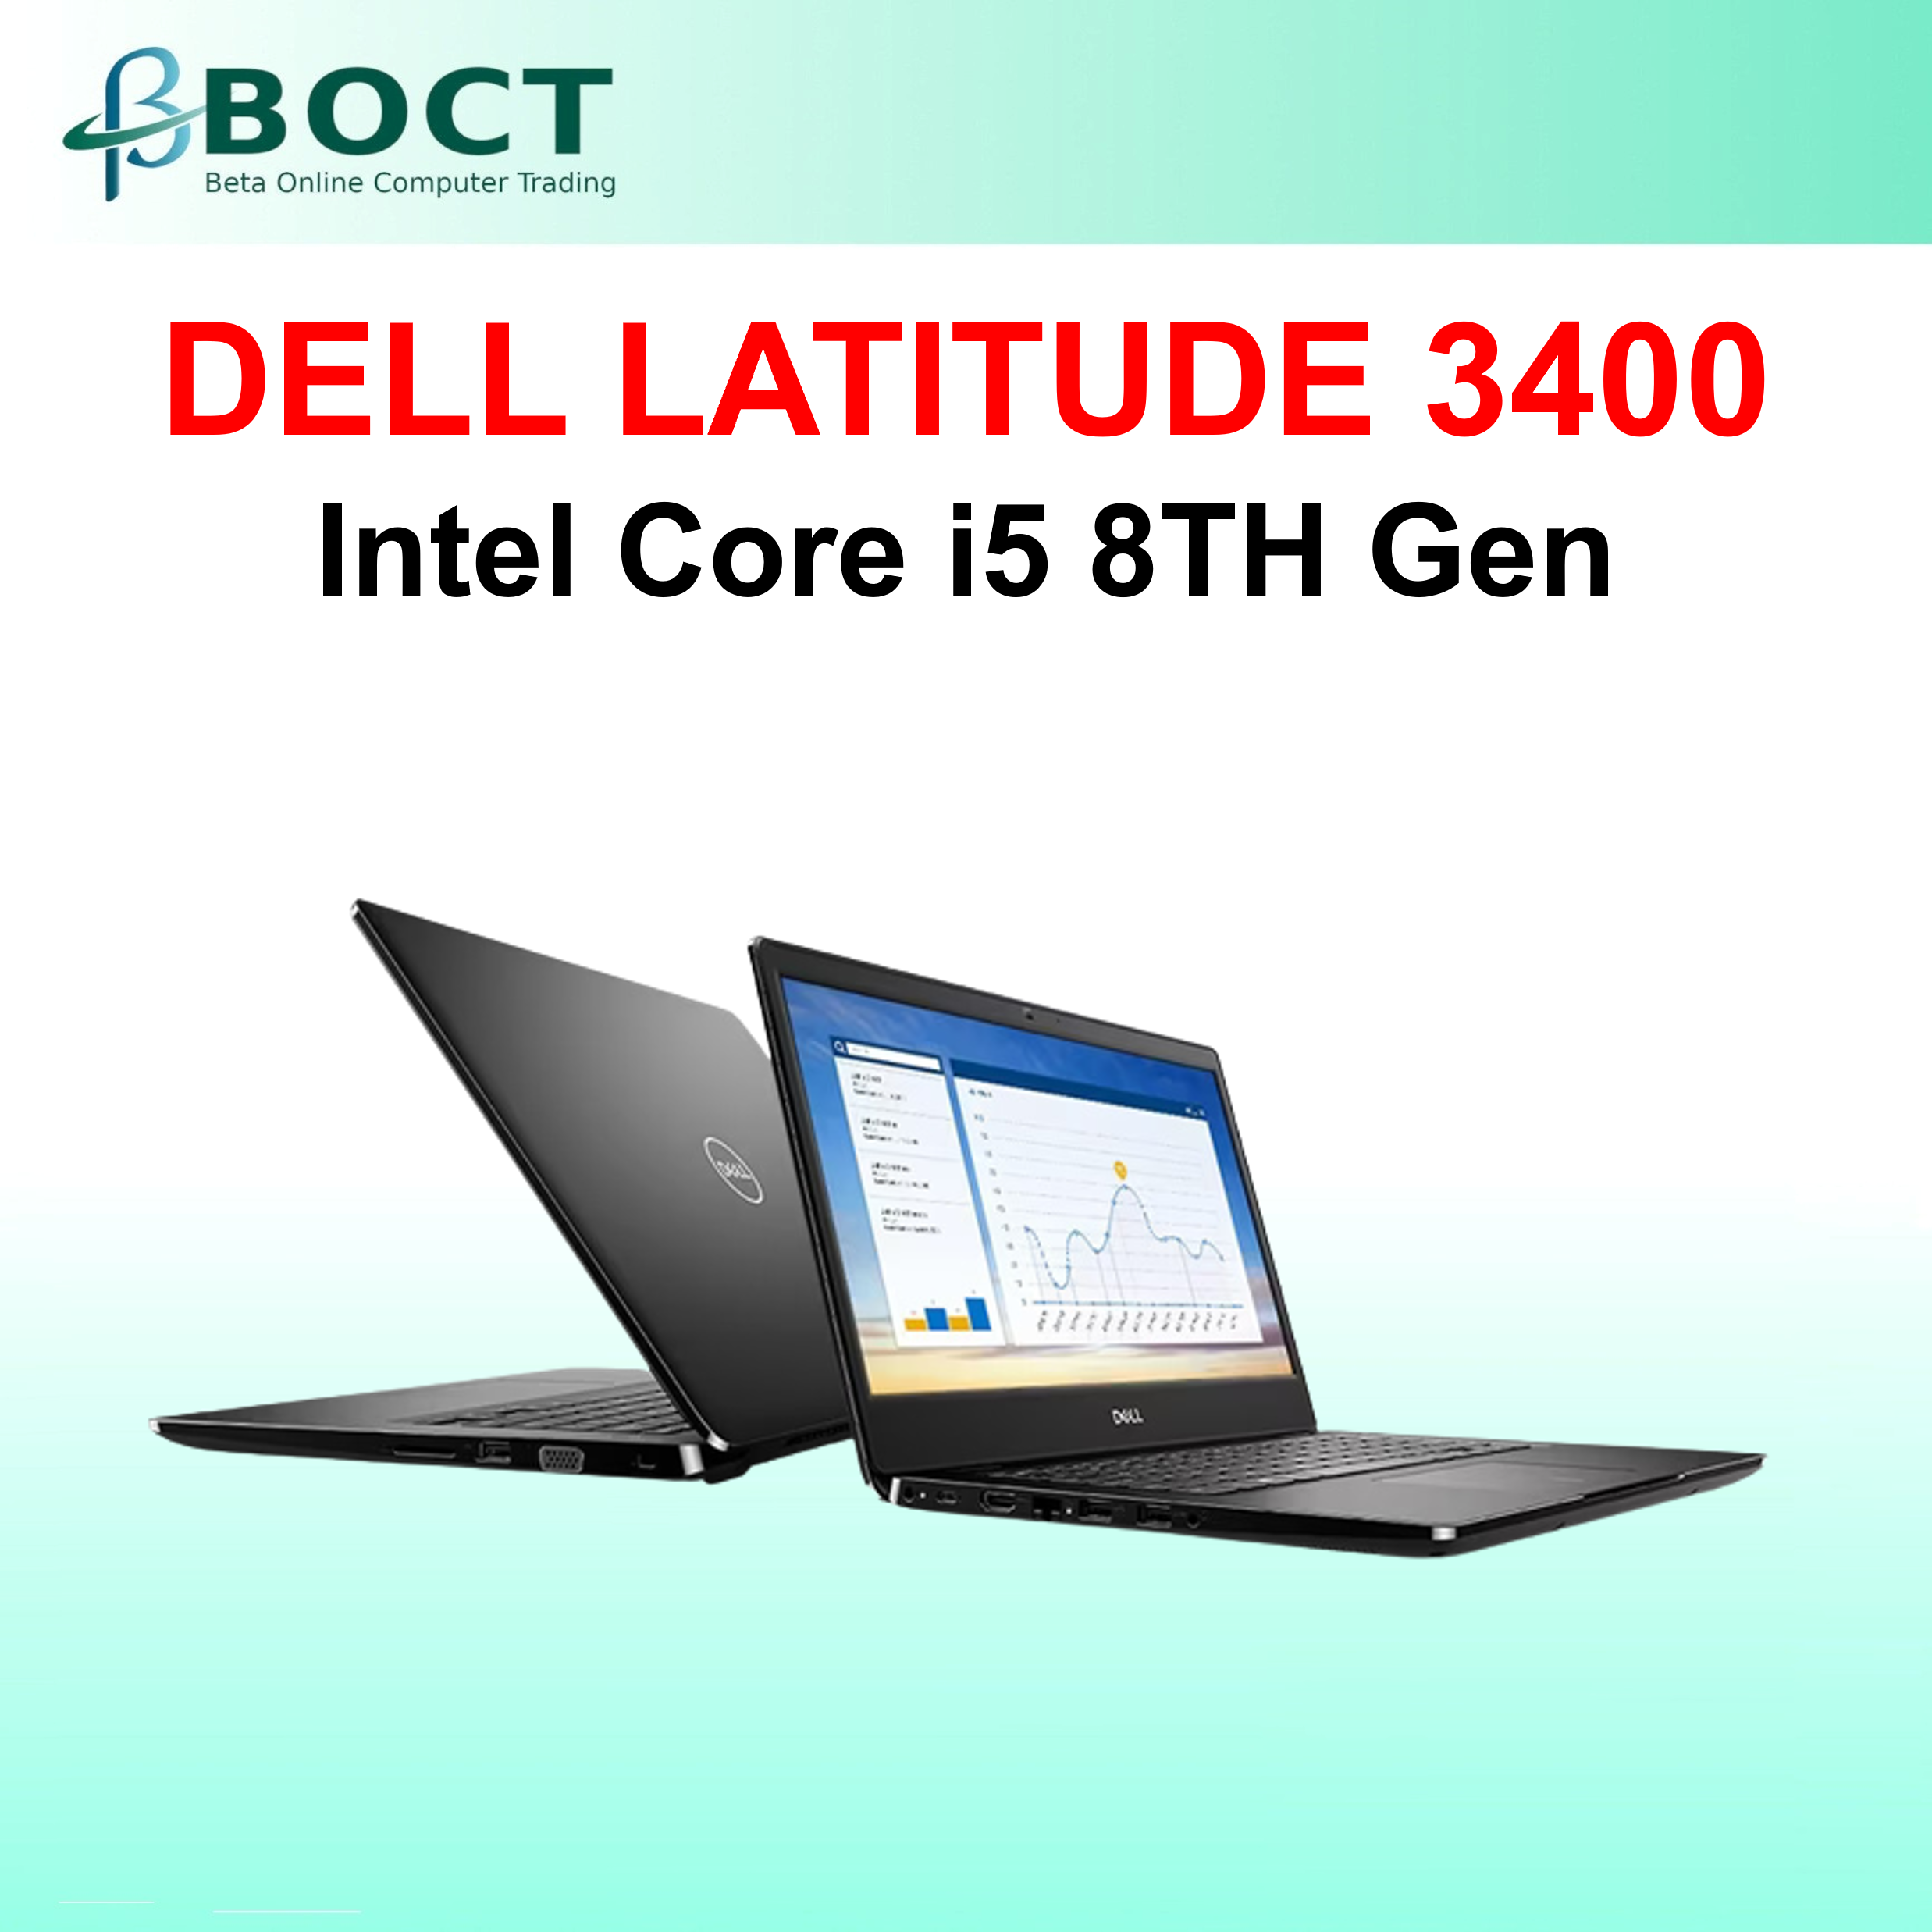 Shop Dell Latitude 3400 online - Aug 2022 